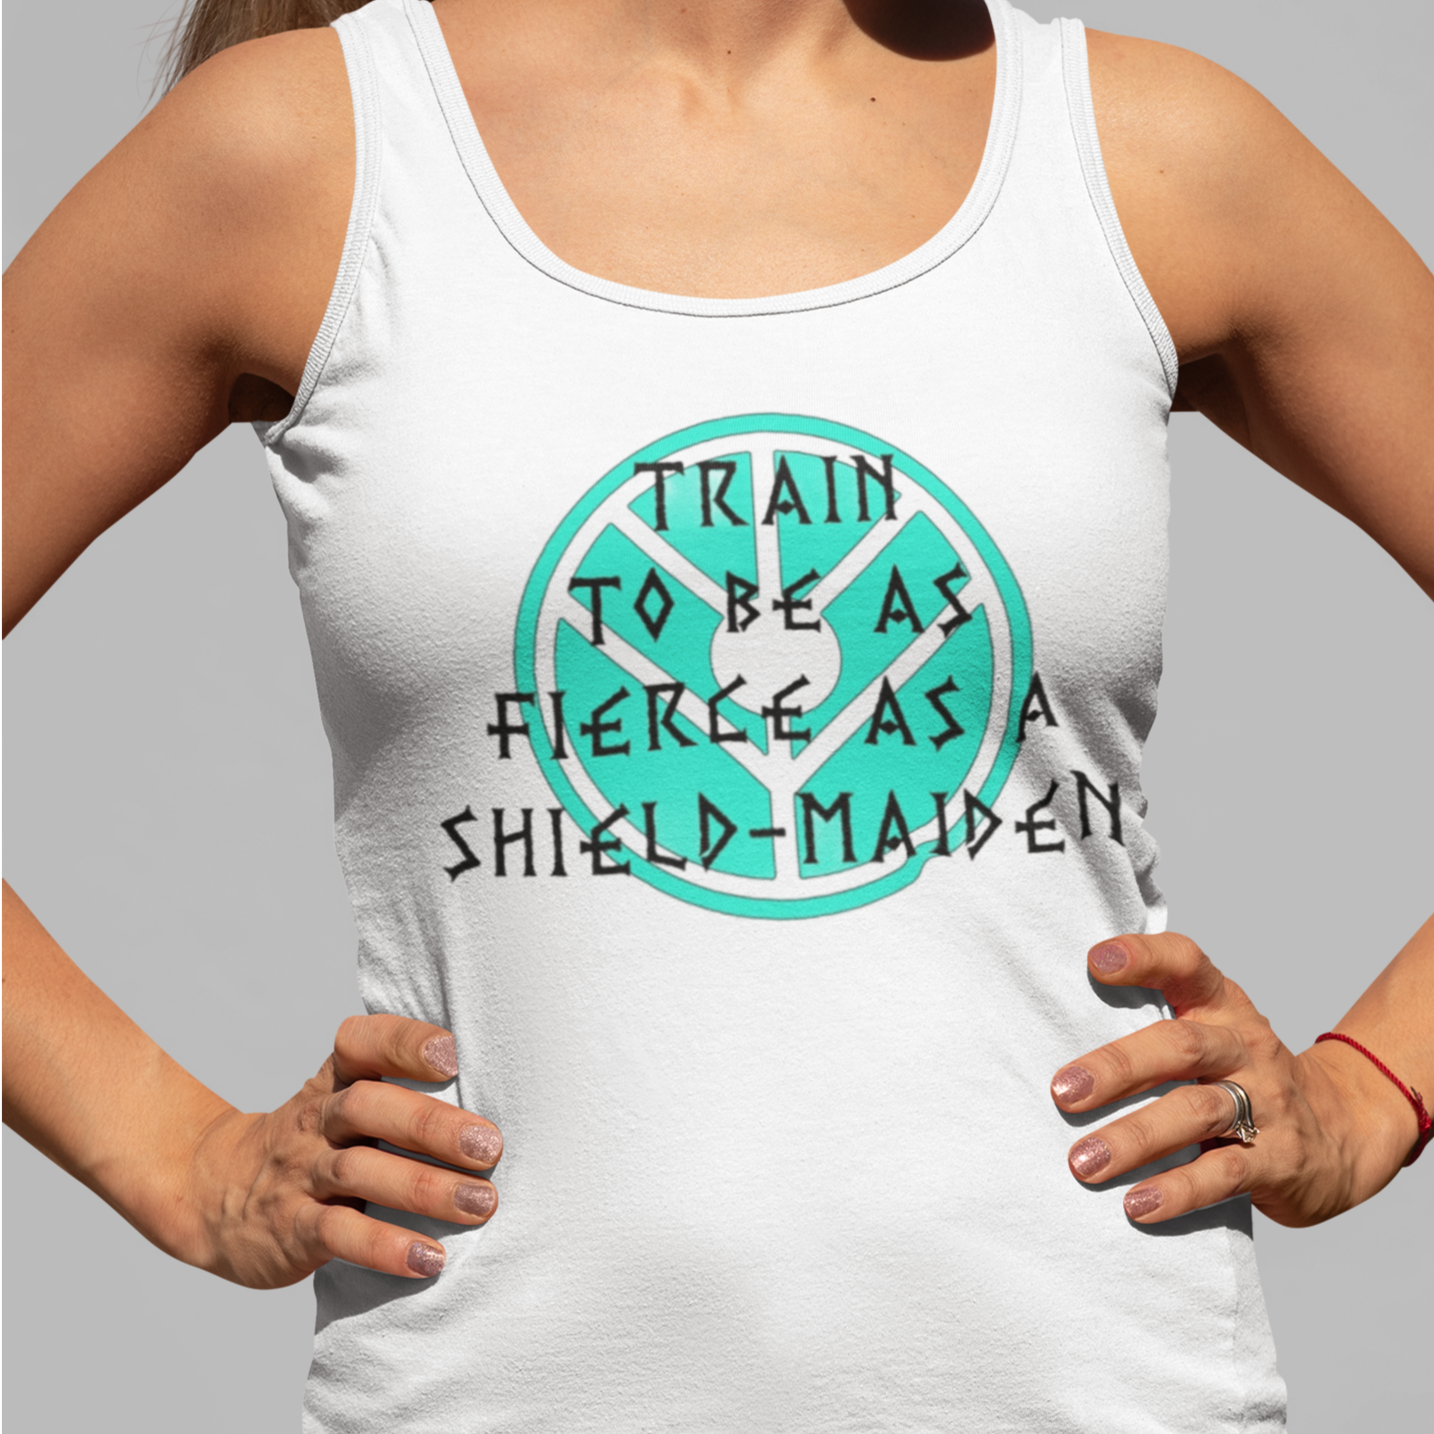 Shieldmaiden T-shirt